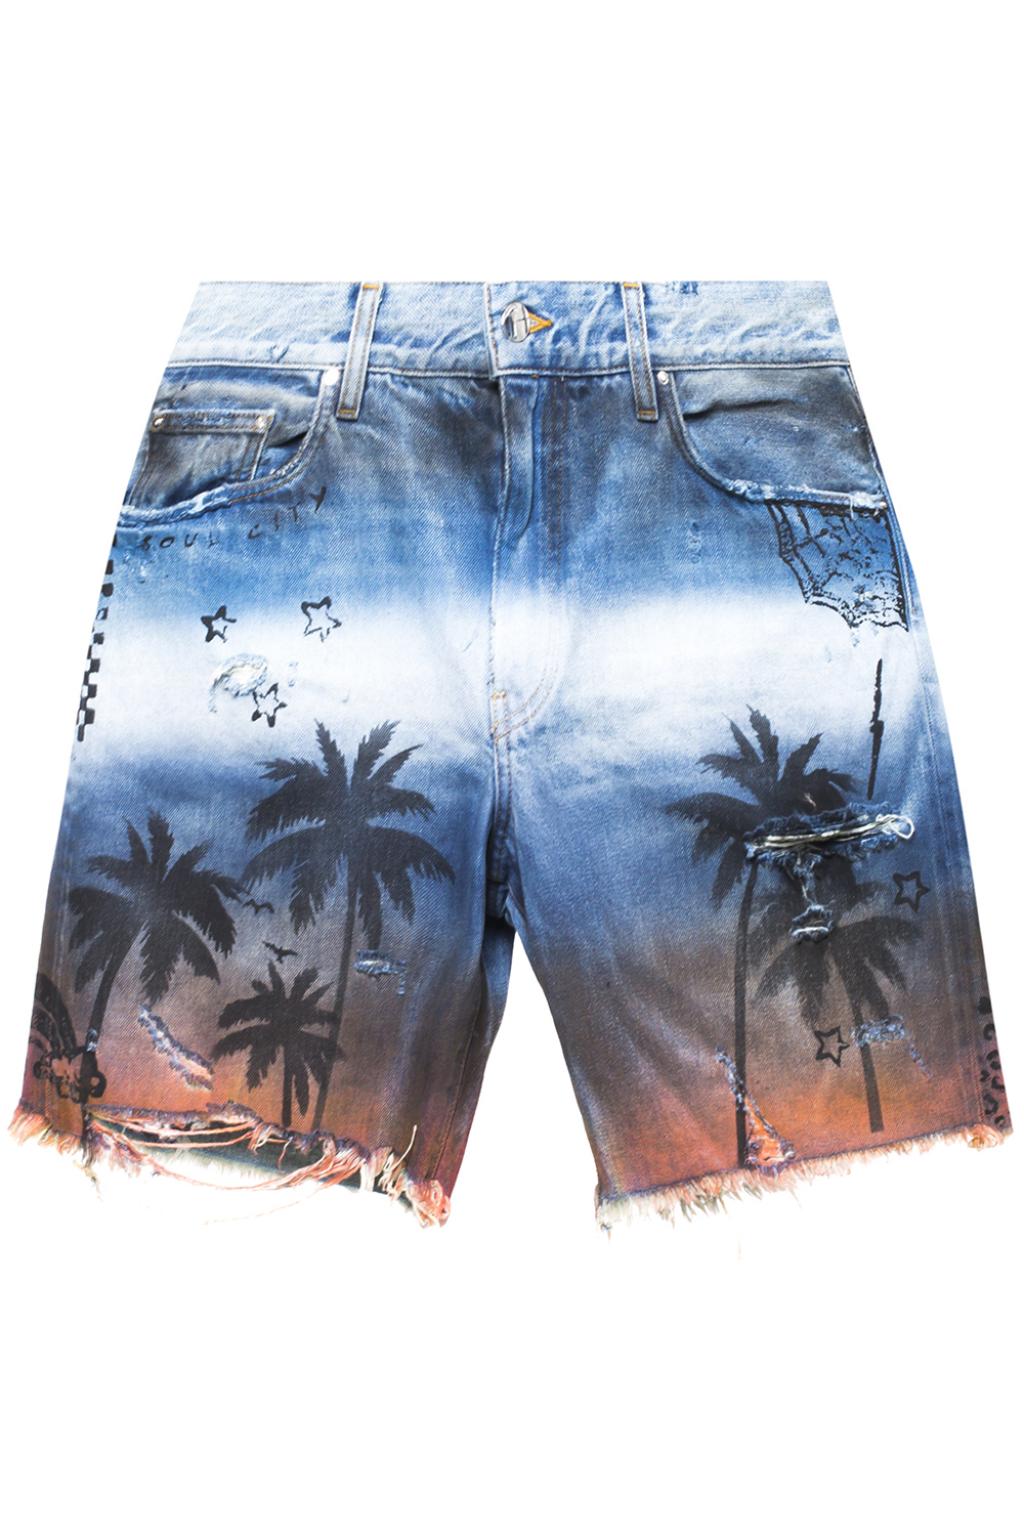 amiri palm tree jeans